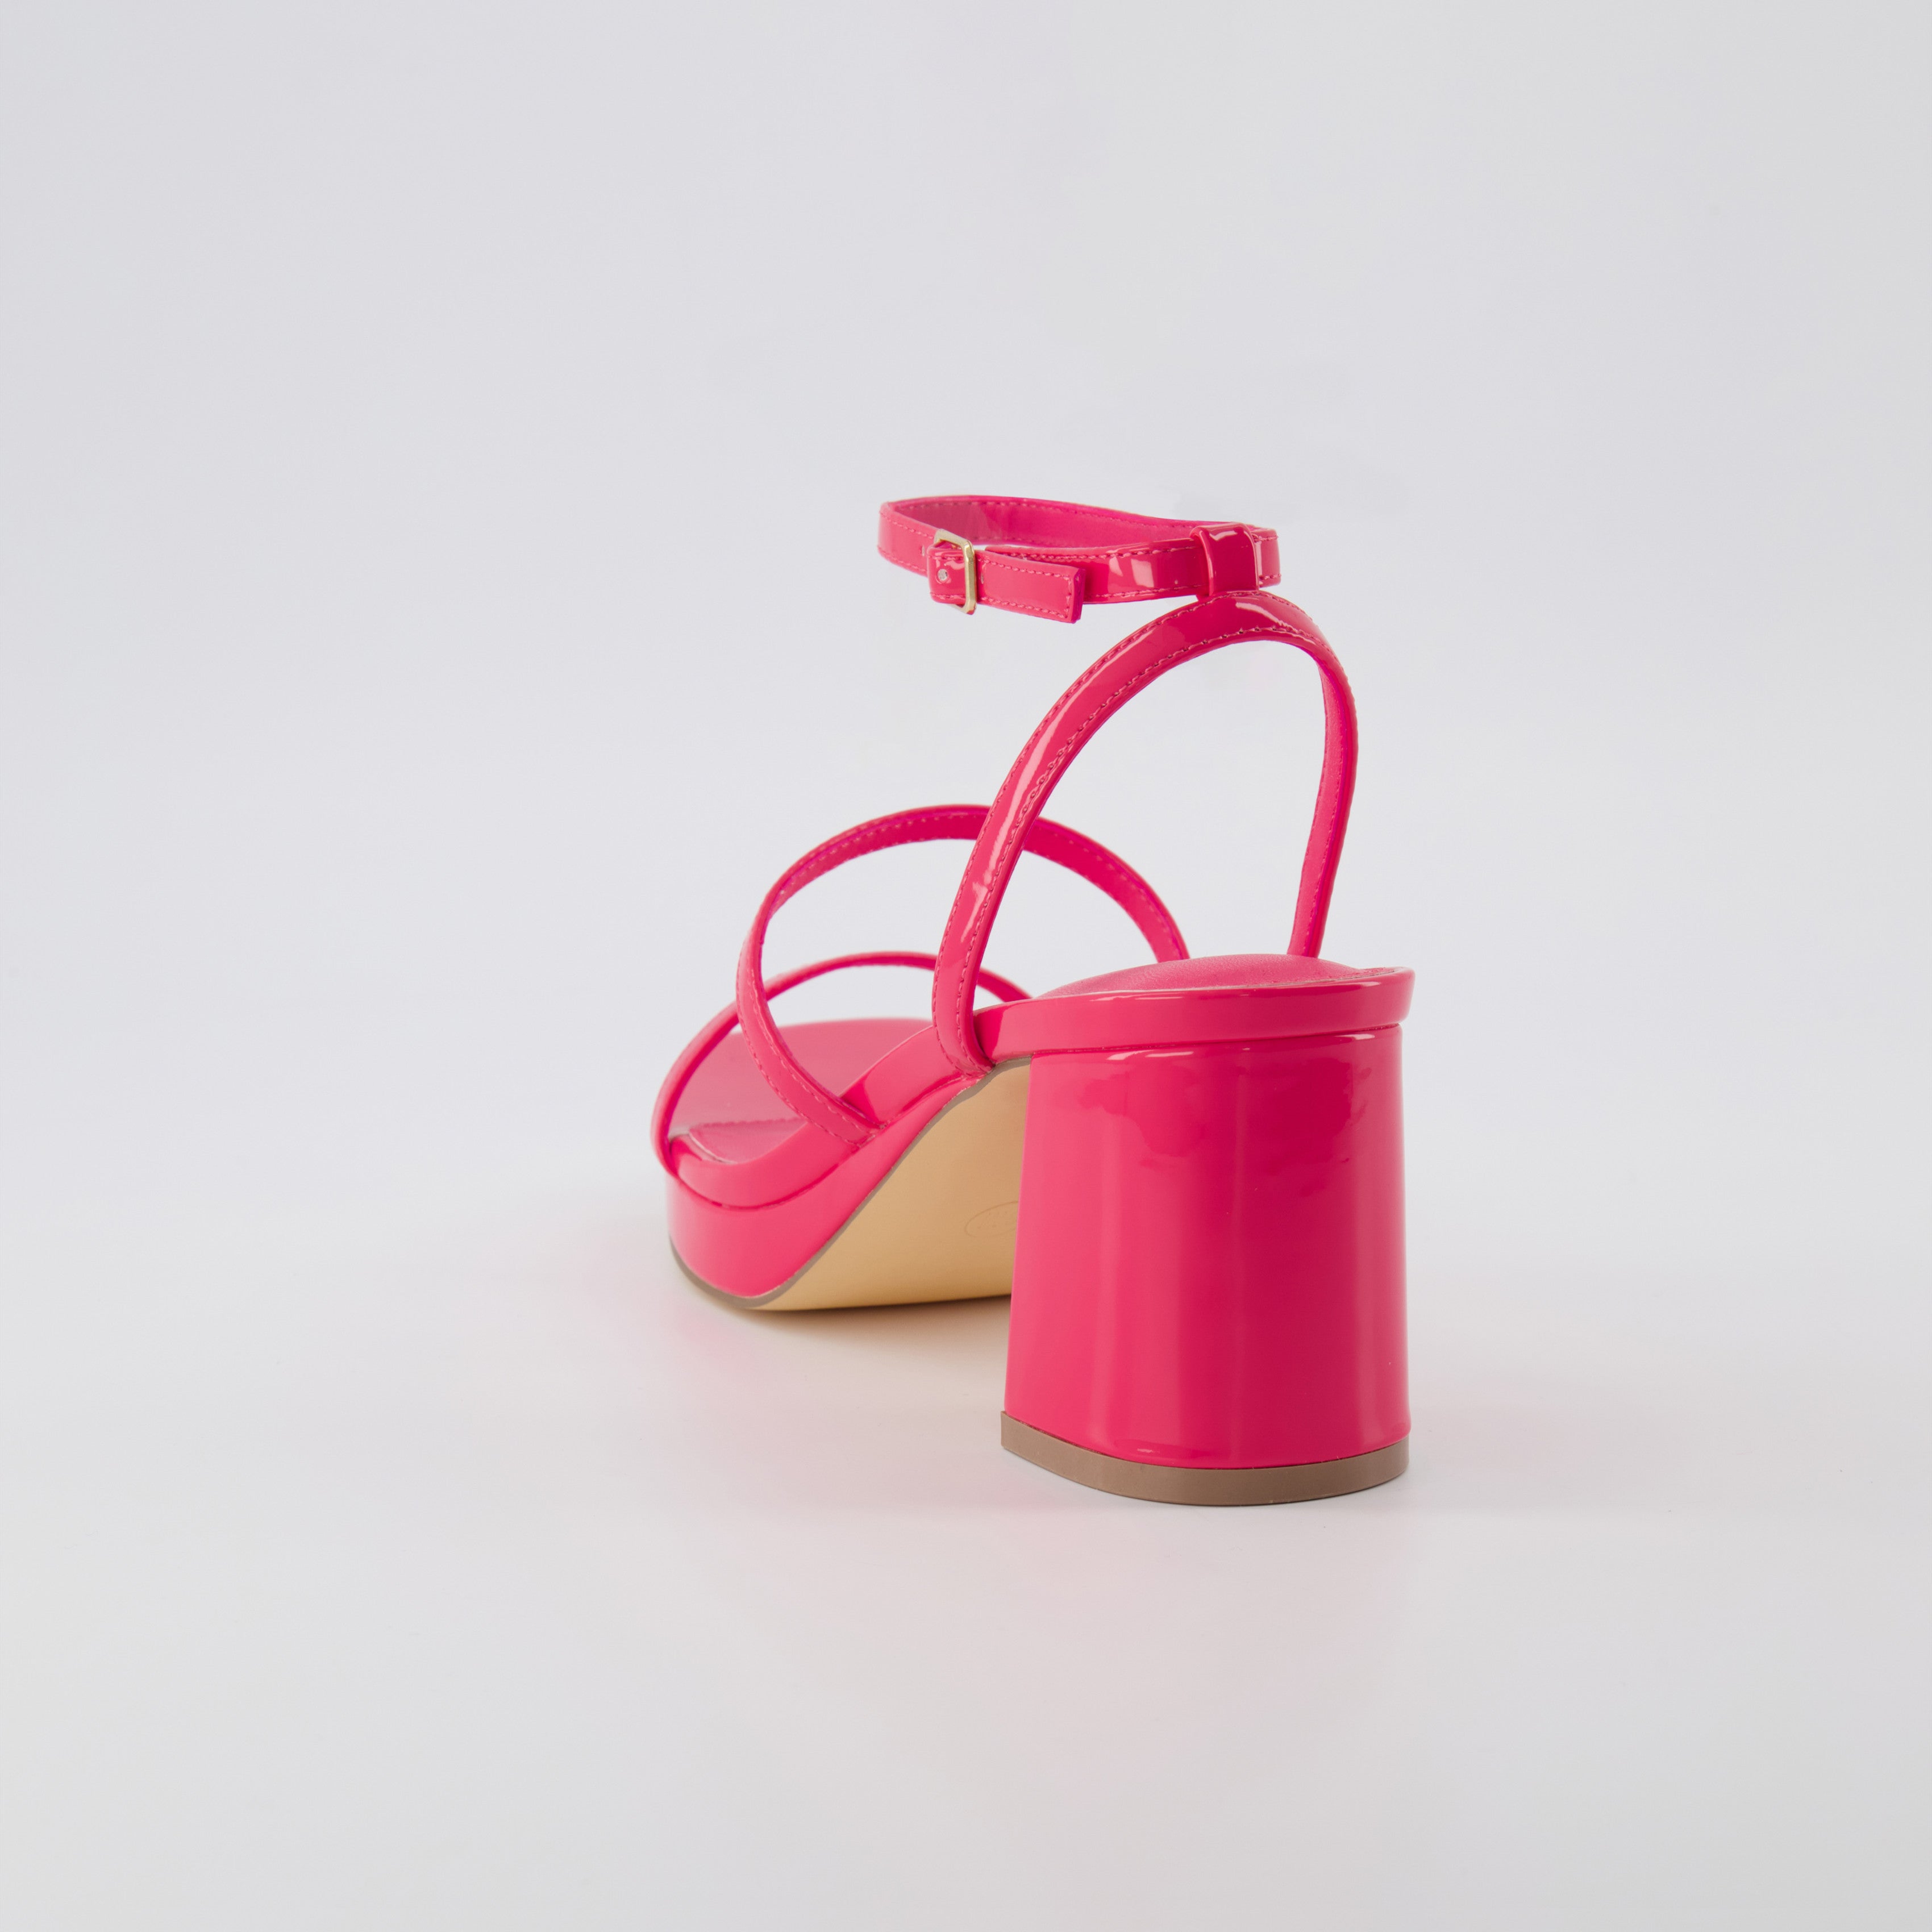 Roma Platform Dress Sandal Patents